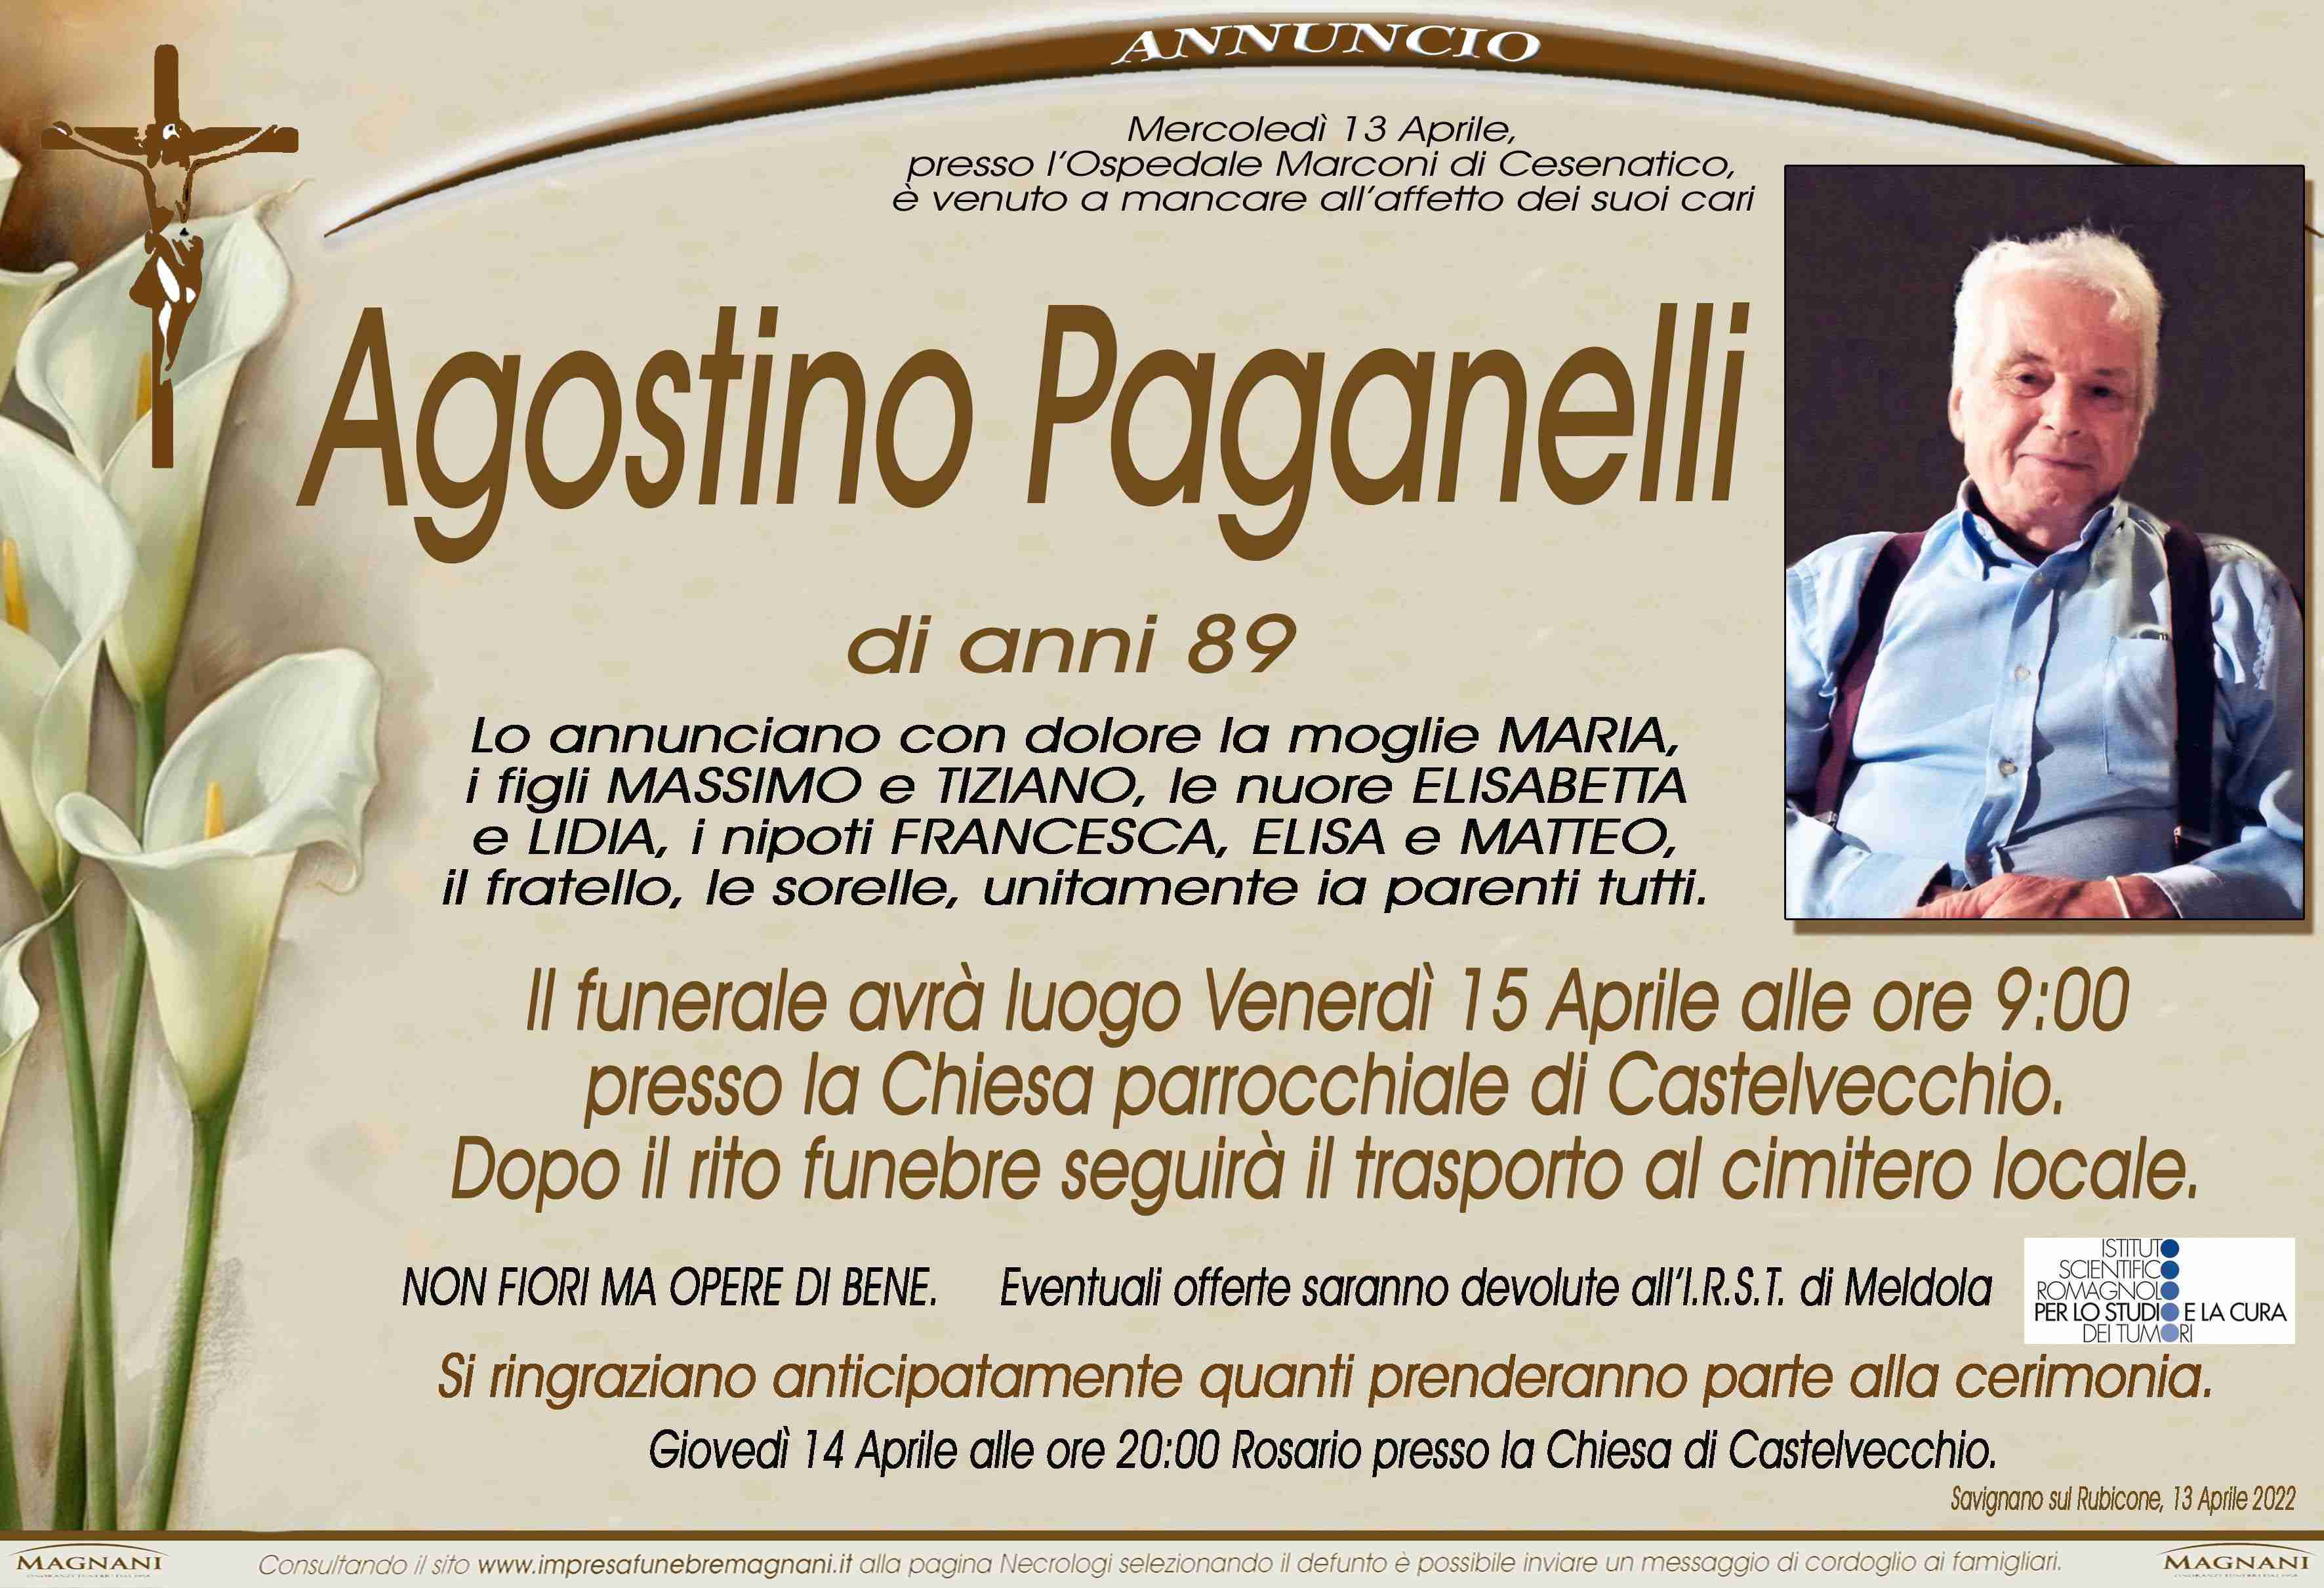 Agostino Paganelli